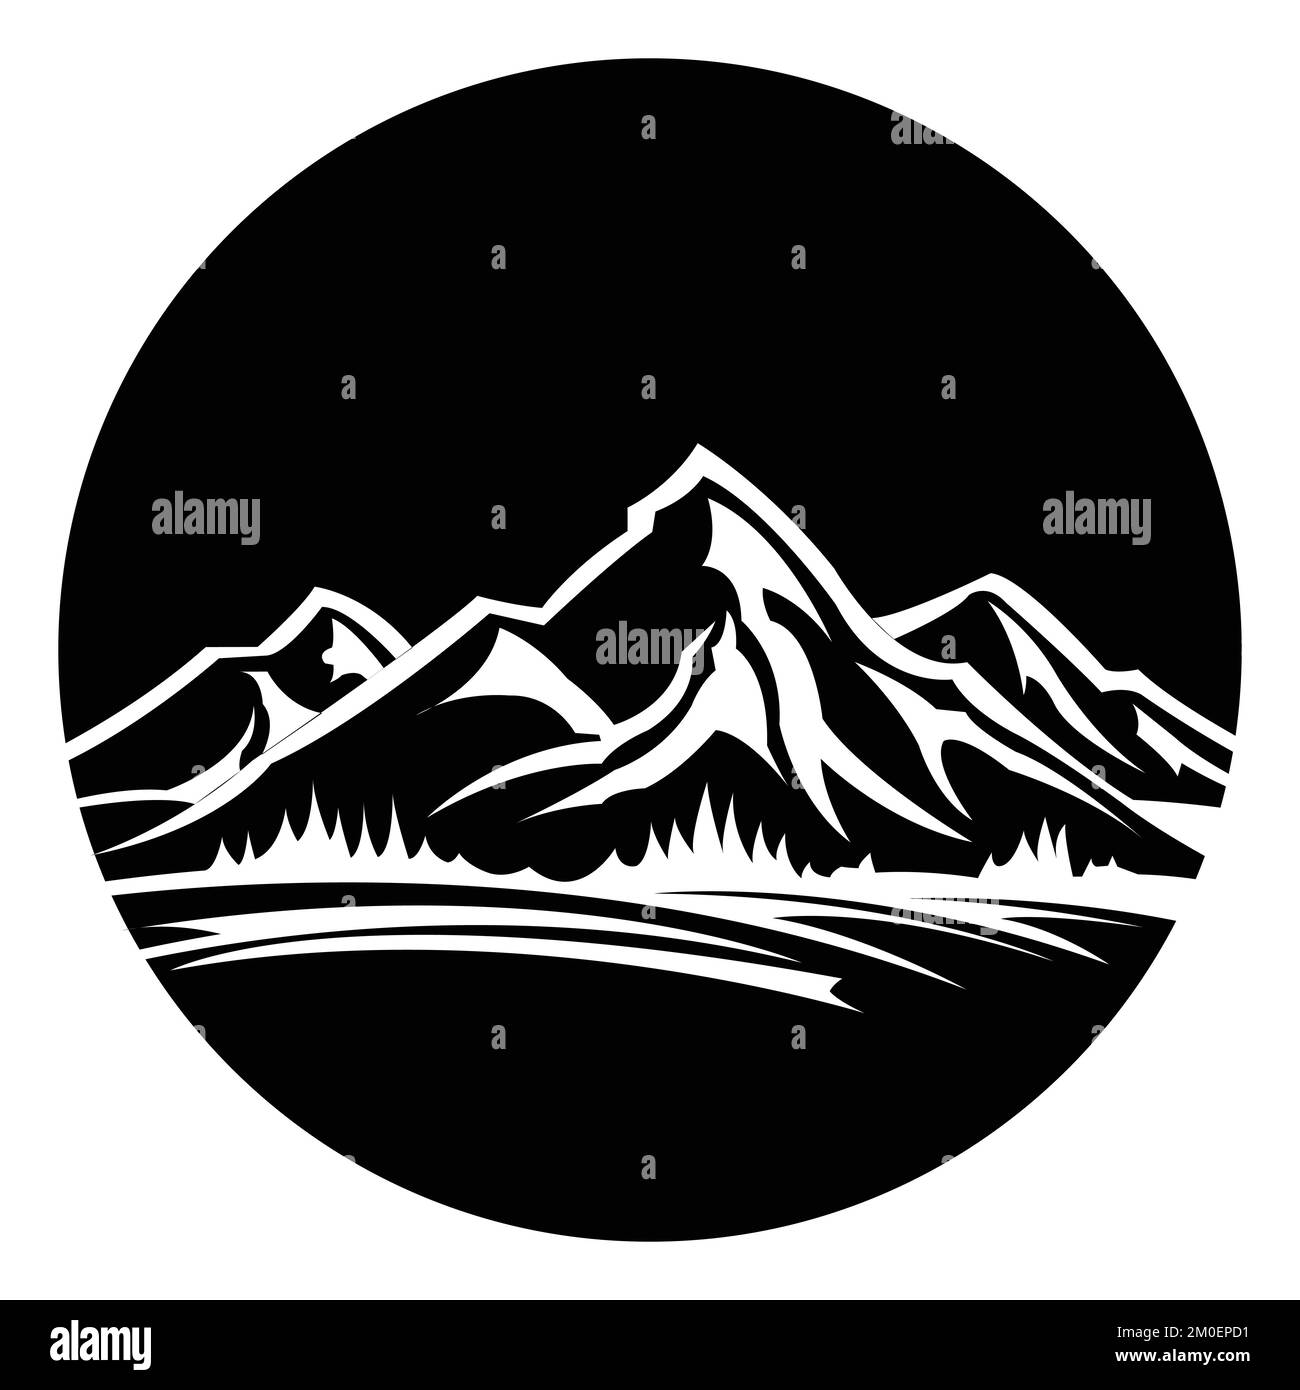 Die Mountain Vector Logo-Vorlage. Das Hauptsymbol des Logos ist Two Mountains.EPS 10 Stock Vektor